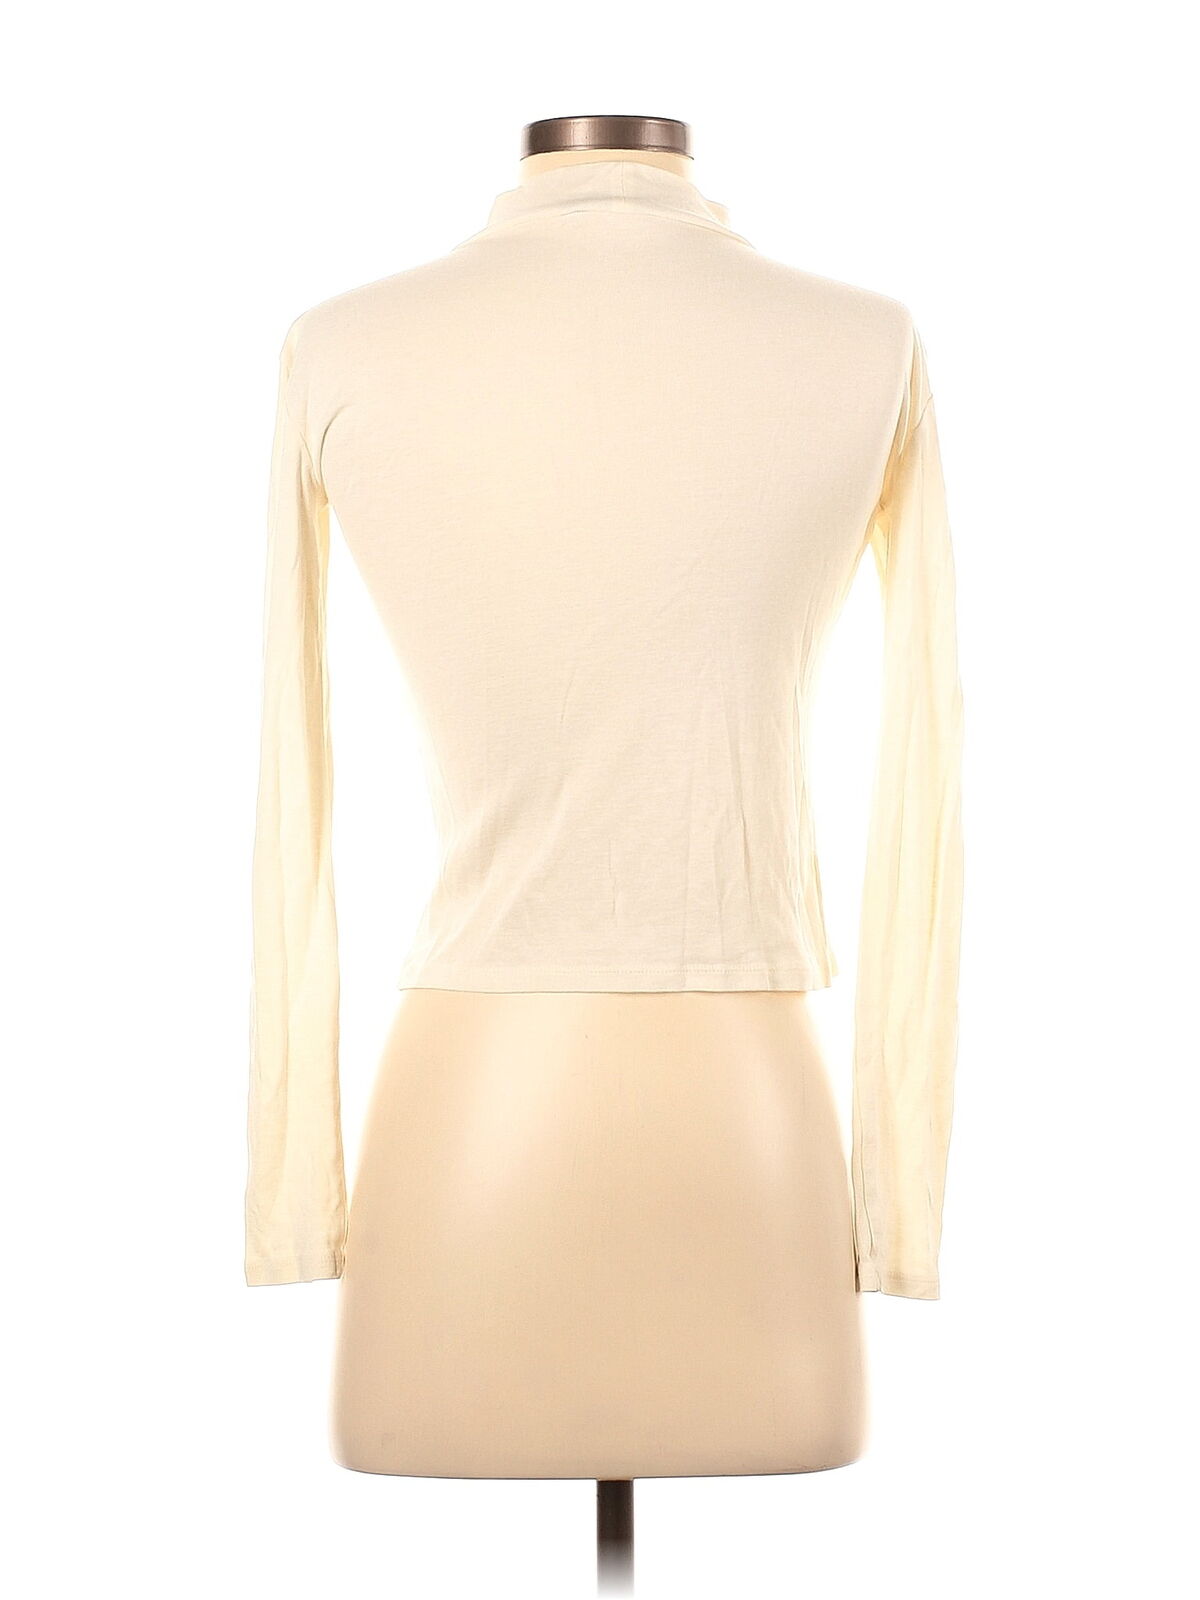 Zara Women Ivory Long Sleeve Turtleneck S - image 2